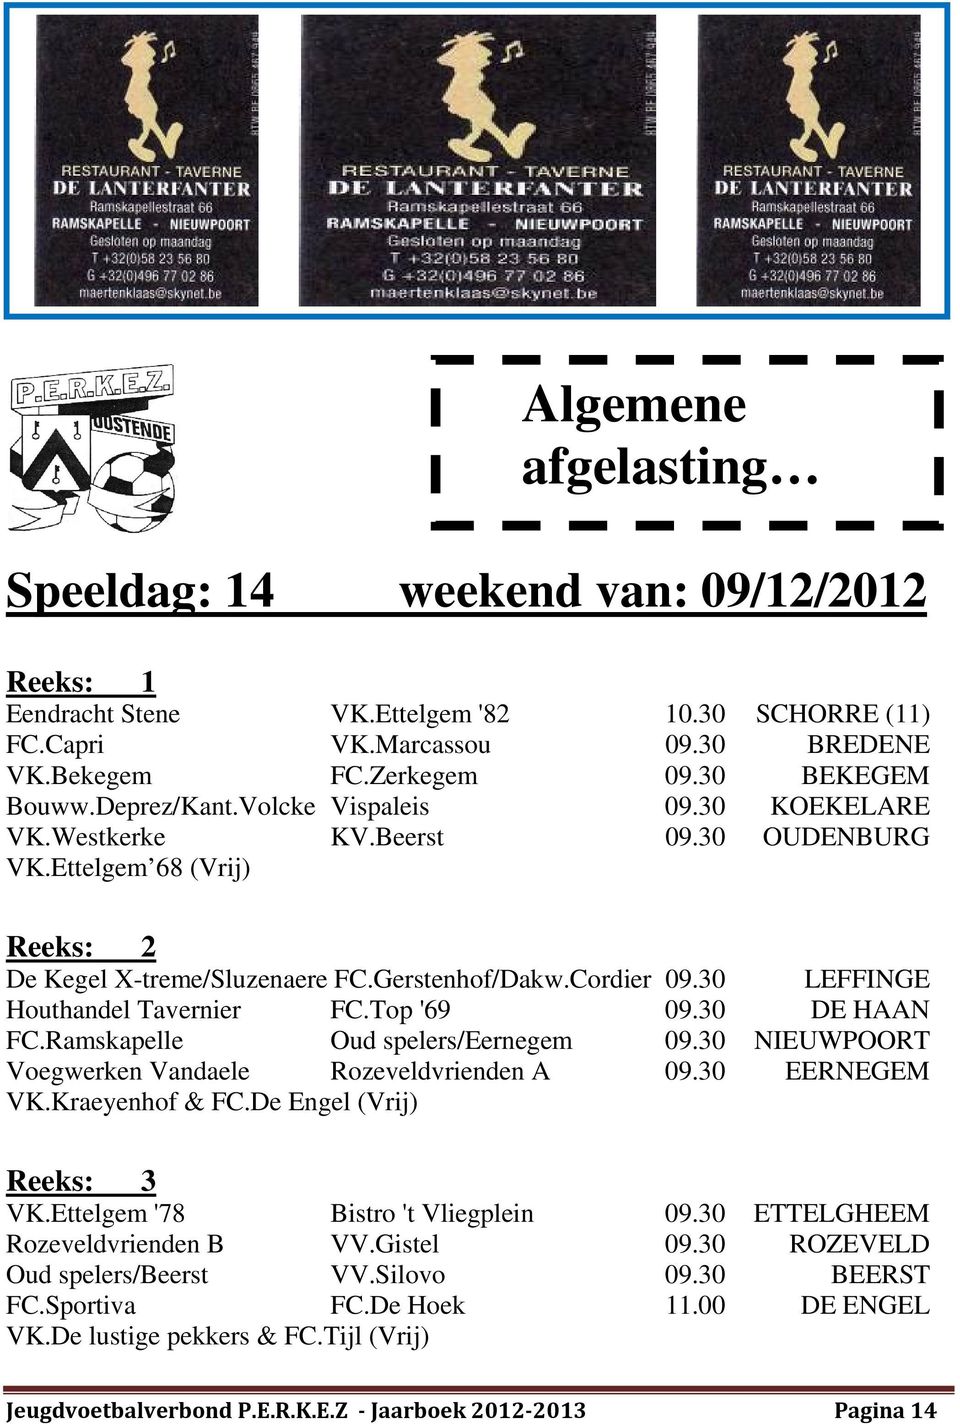 Top '69 09.30 DE HAAN FC.Ramskapelle Oud spelers/eernegem 09.30 NIEUWPOORT Voegwerken Vandaele Rozeveldvrienden A 09.30 EERNEGEM VK.Kraeyenhof & FC.De Engel (Vrij) VK.